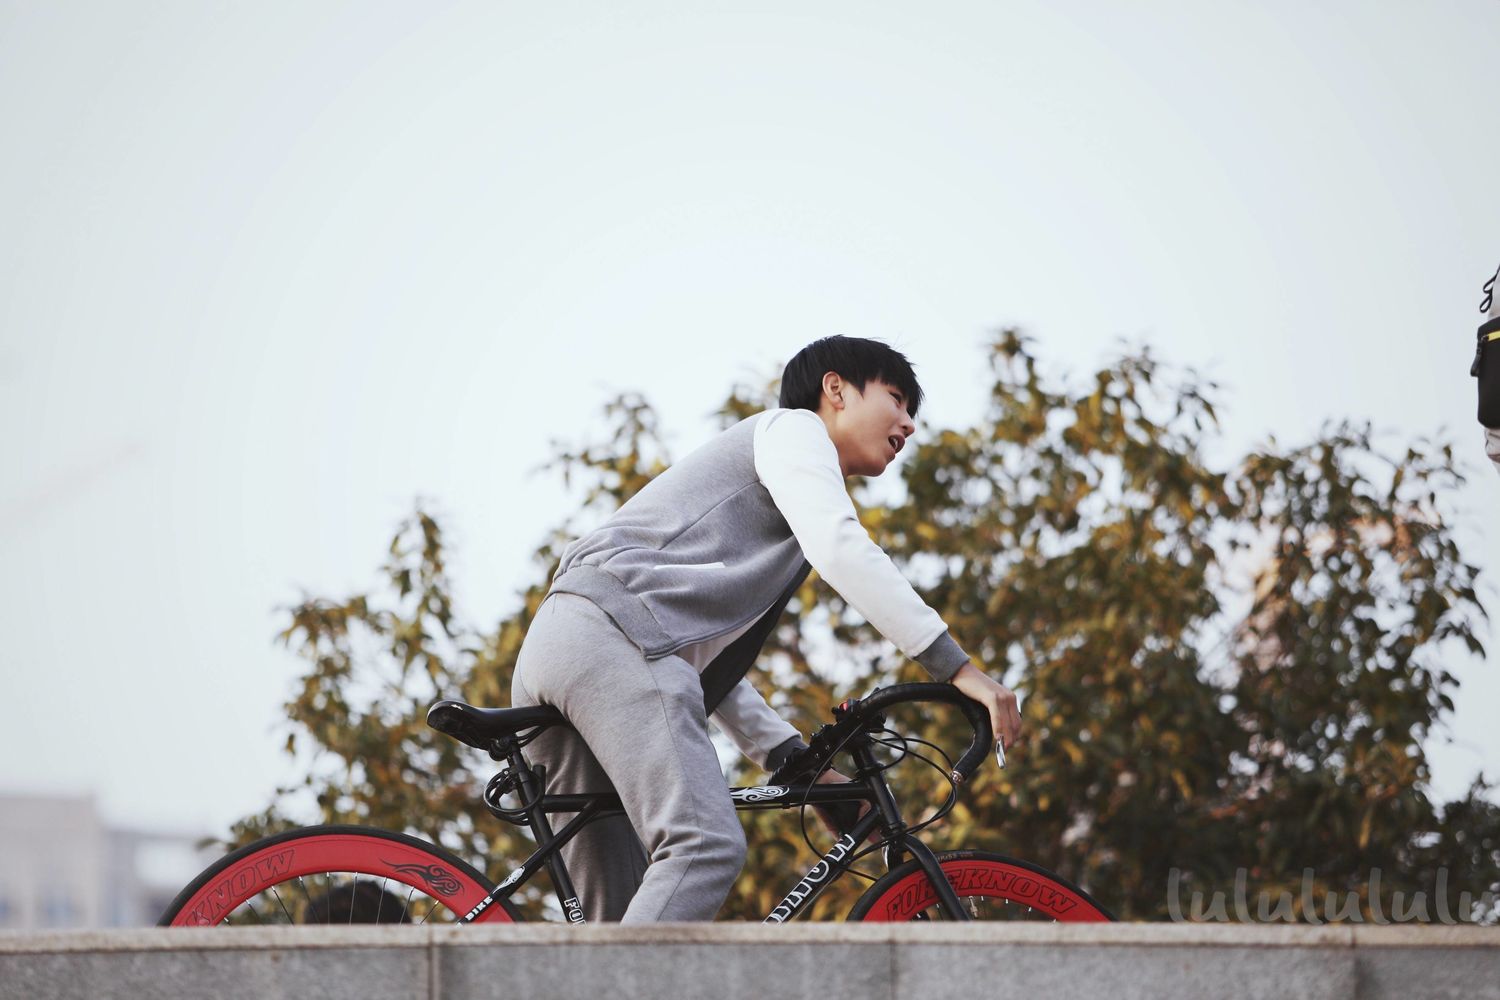 [tfboys][分享]200214 十八岁骑行少年王俊凯合集,骑上单车带你环游